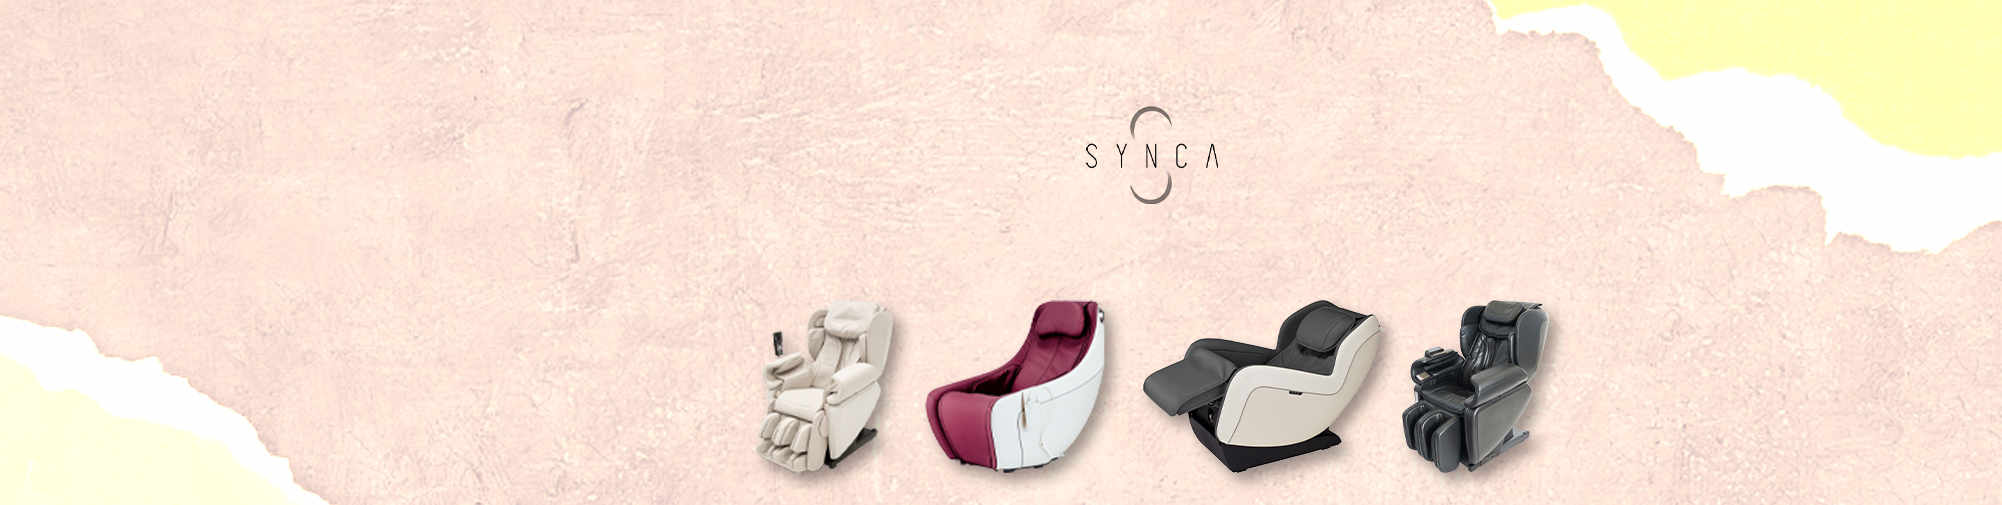 SYNCA - برنده جایزه تولید کننده سلامتی | ماساژ صندلی جهان